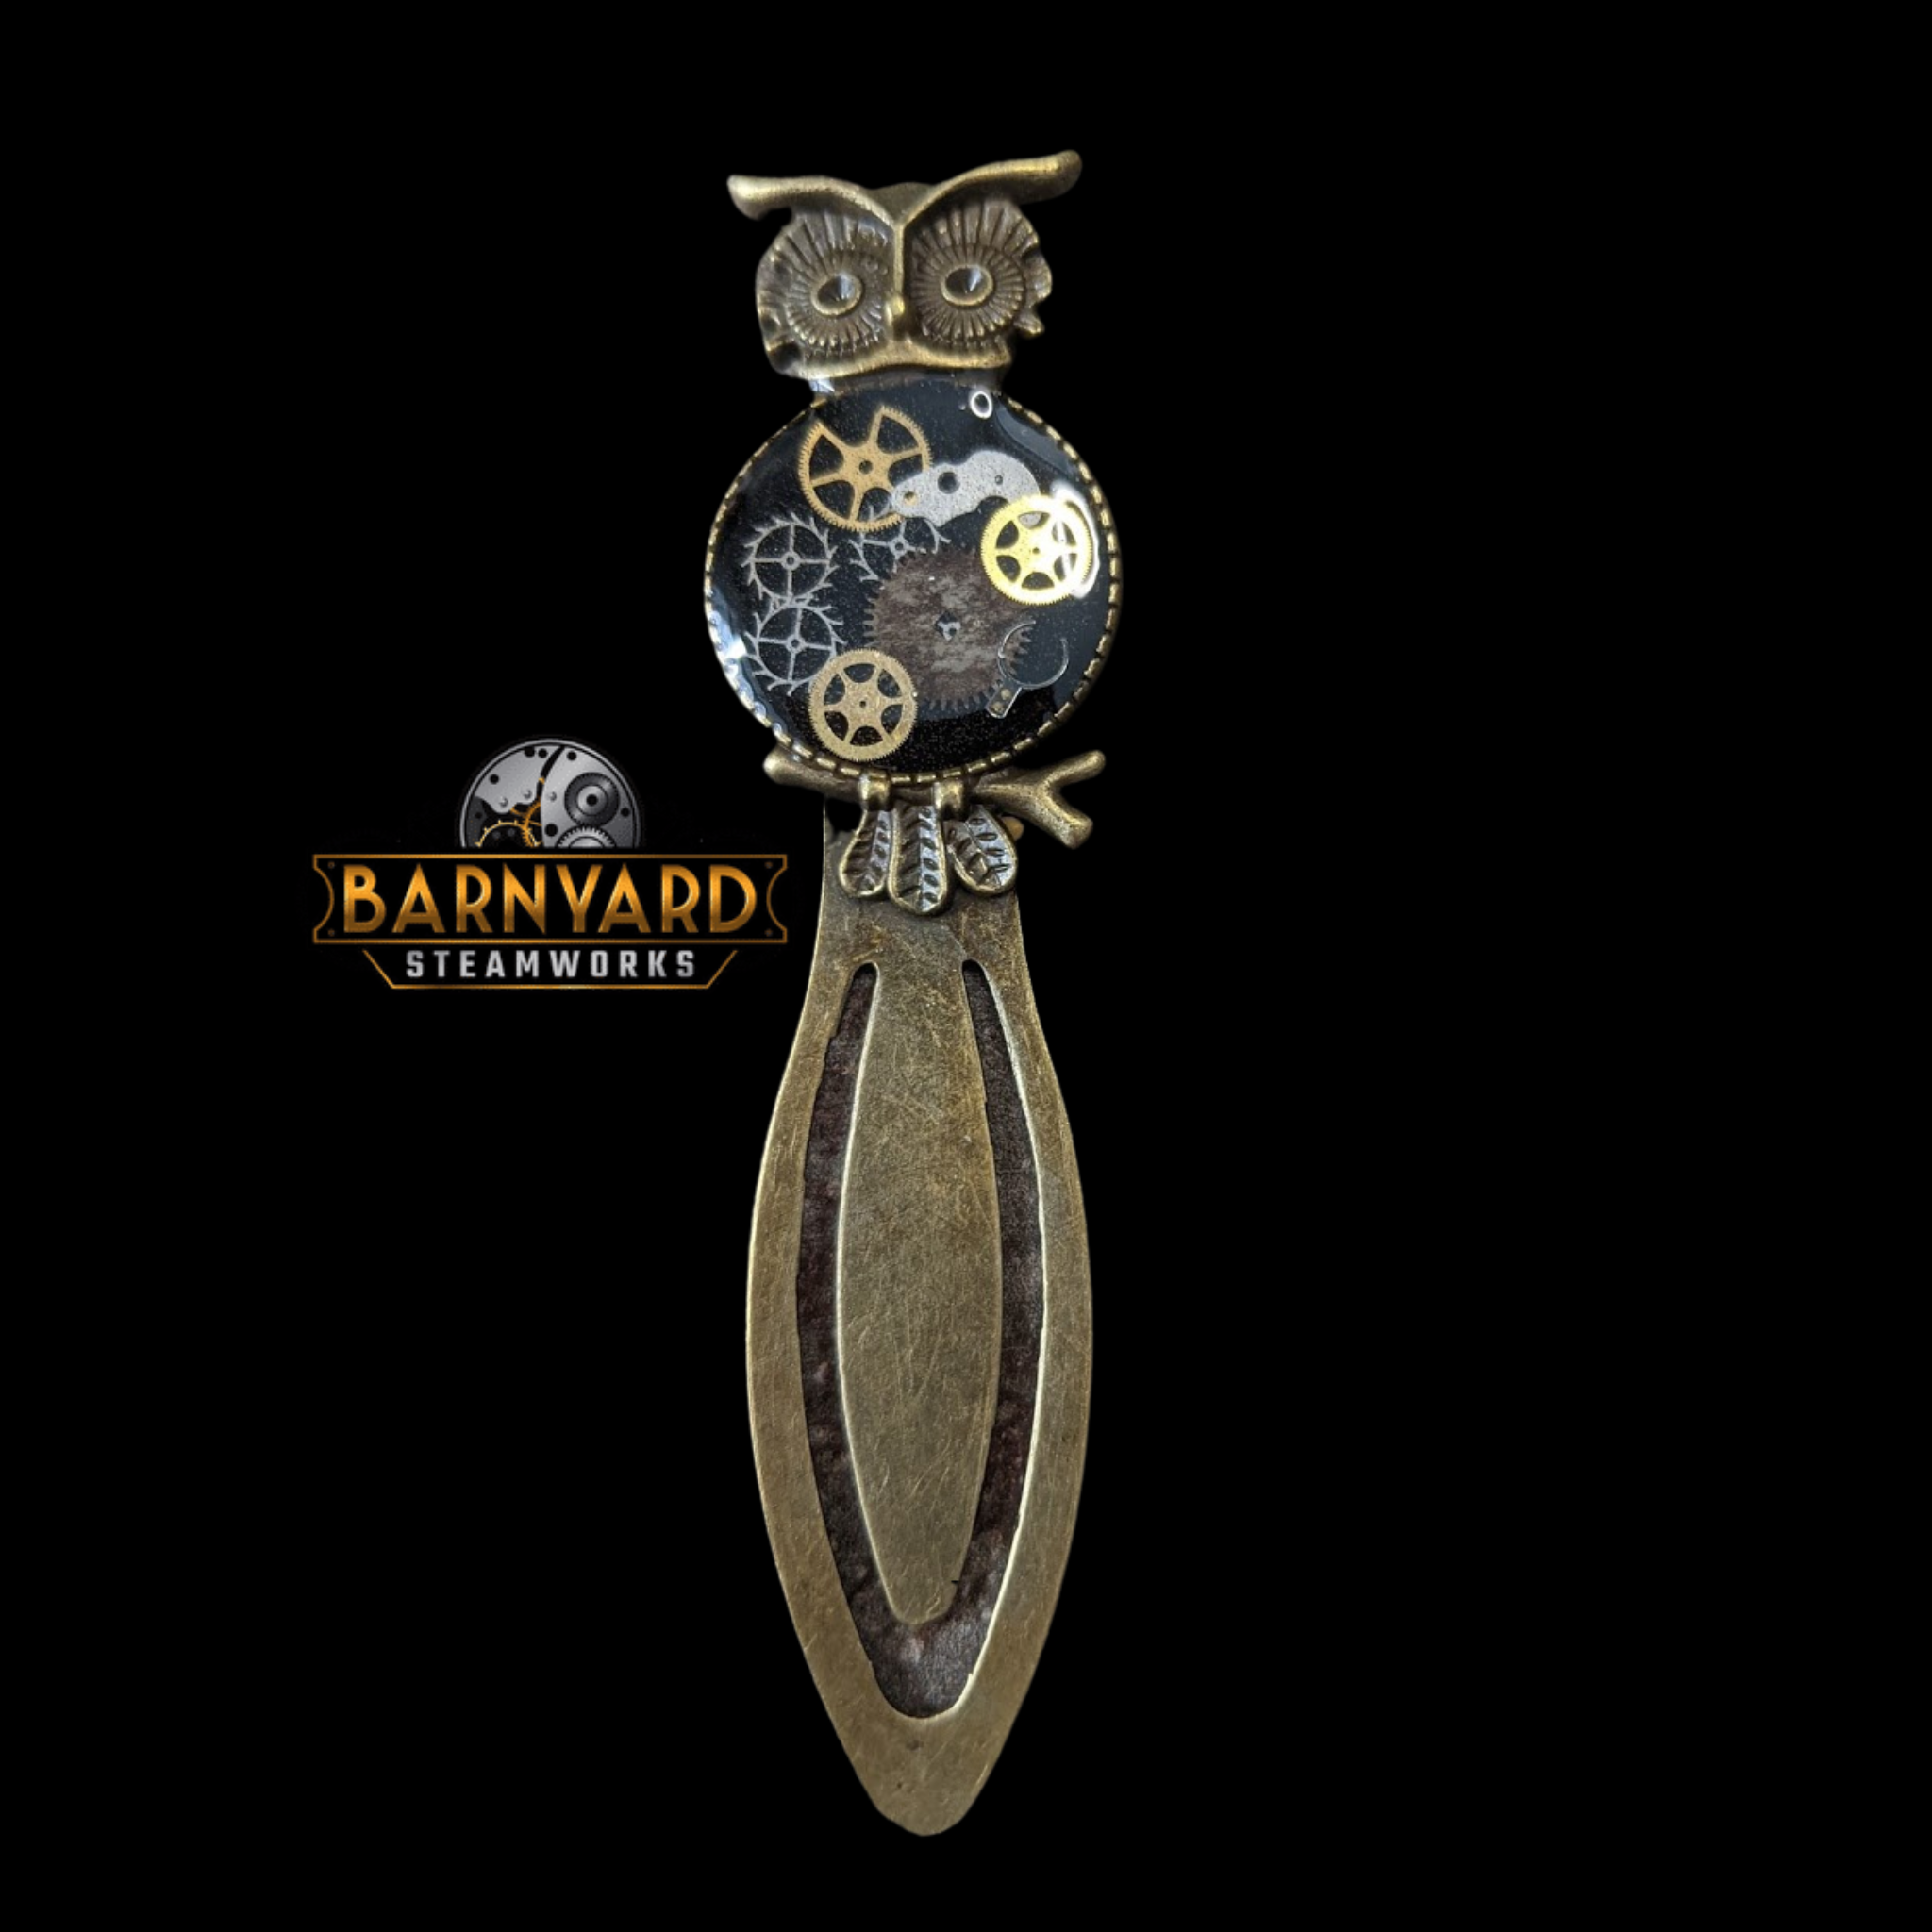 Bookmark - Antique Bronze with Owl